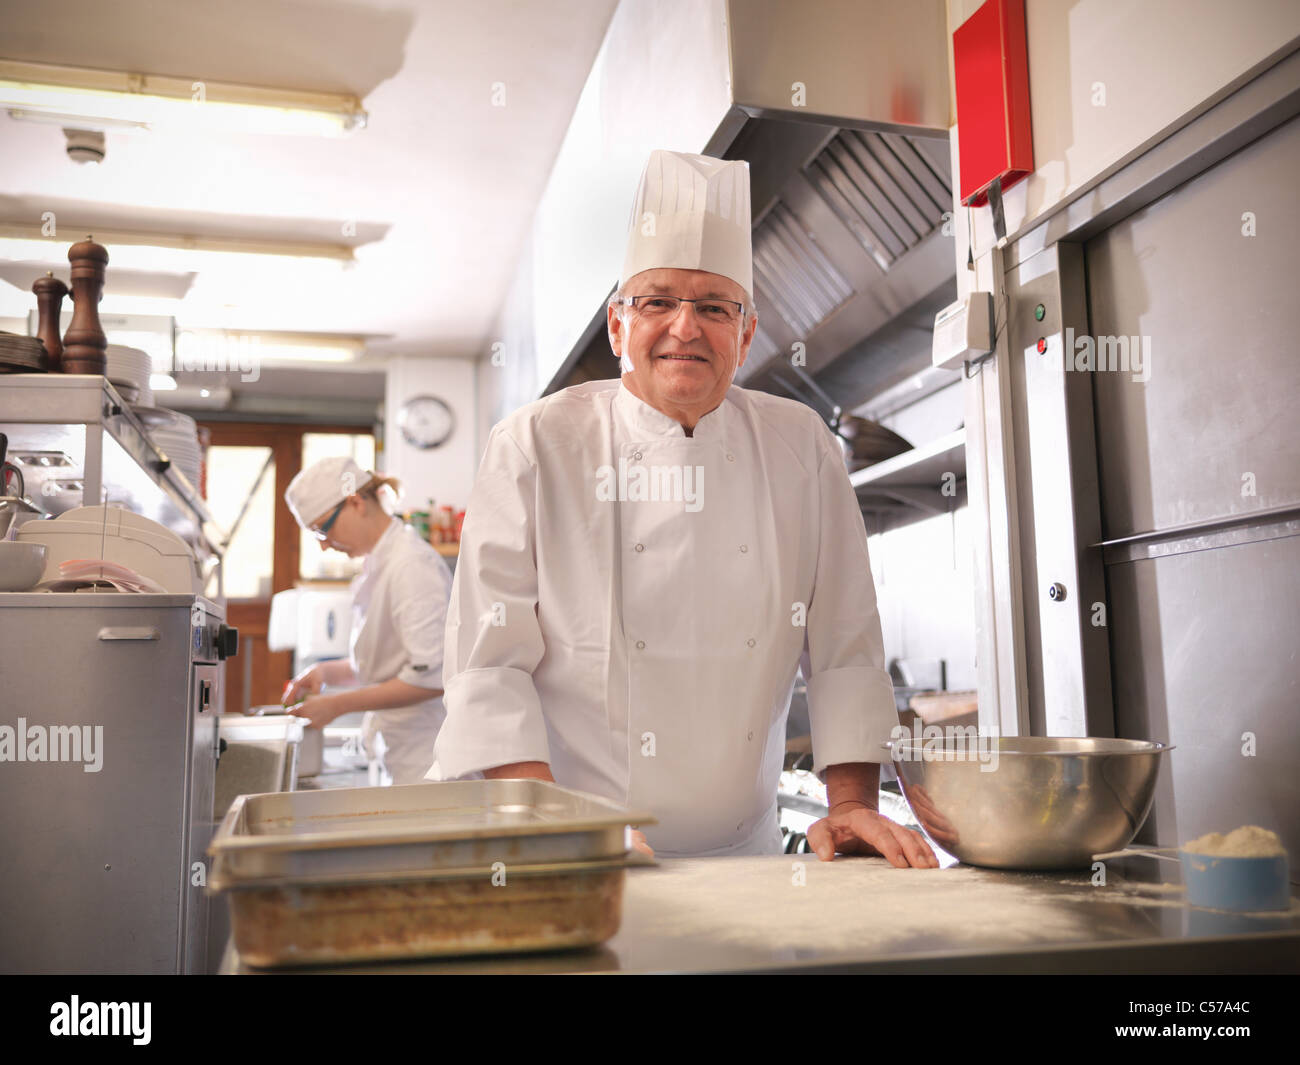 Chef smiling in restaurant kitchen Banque D'Images